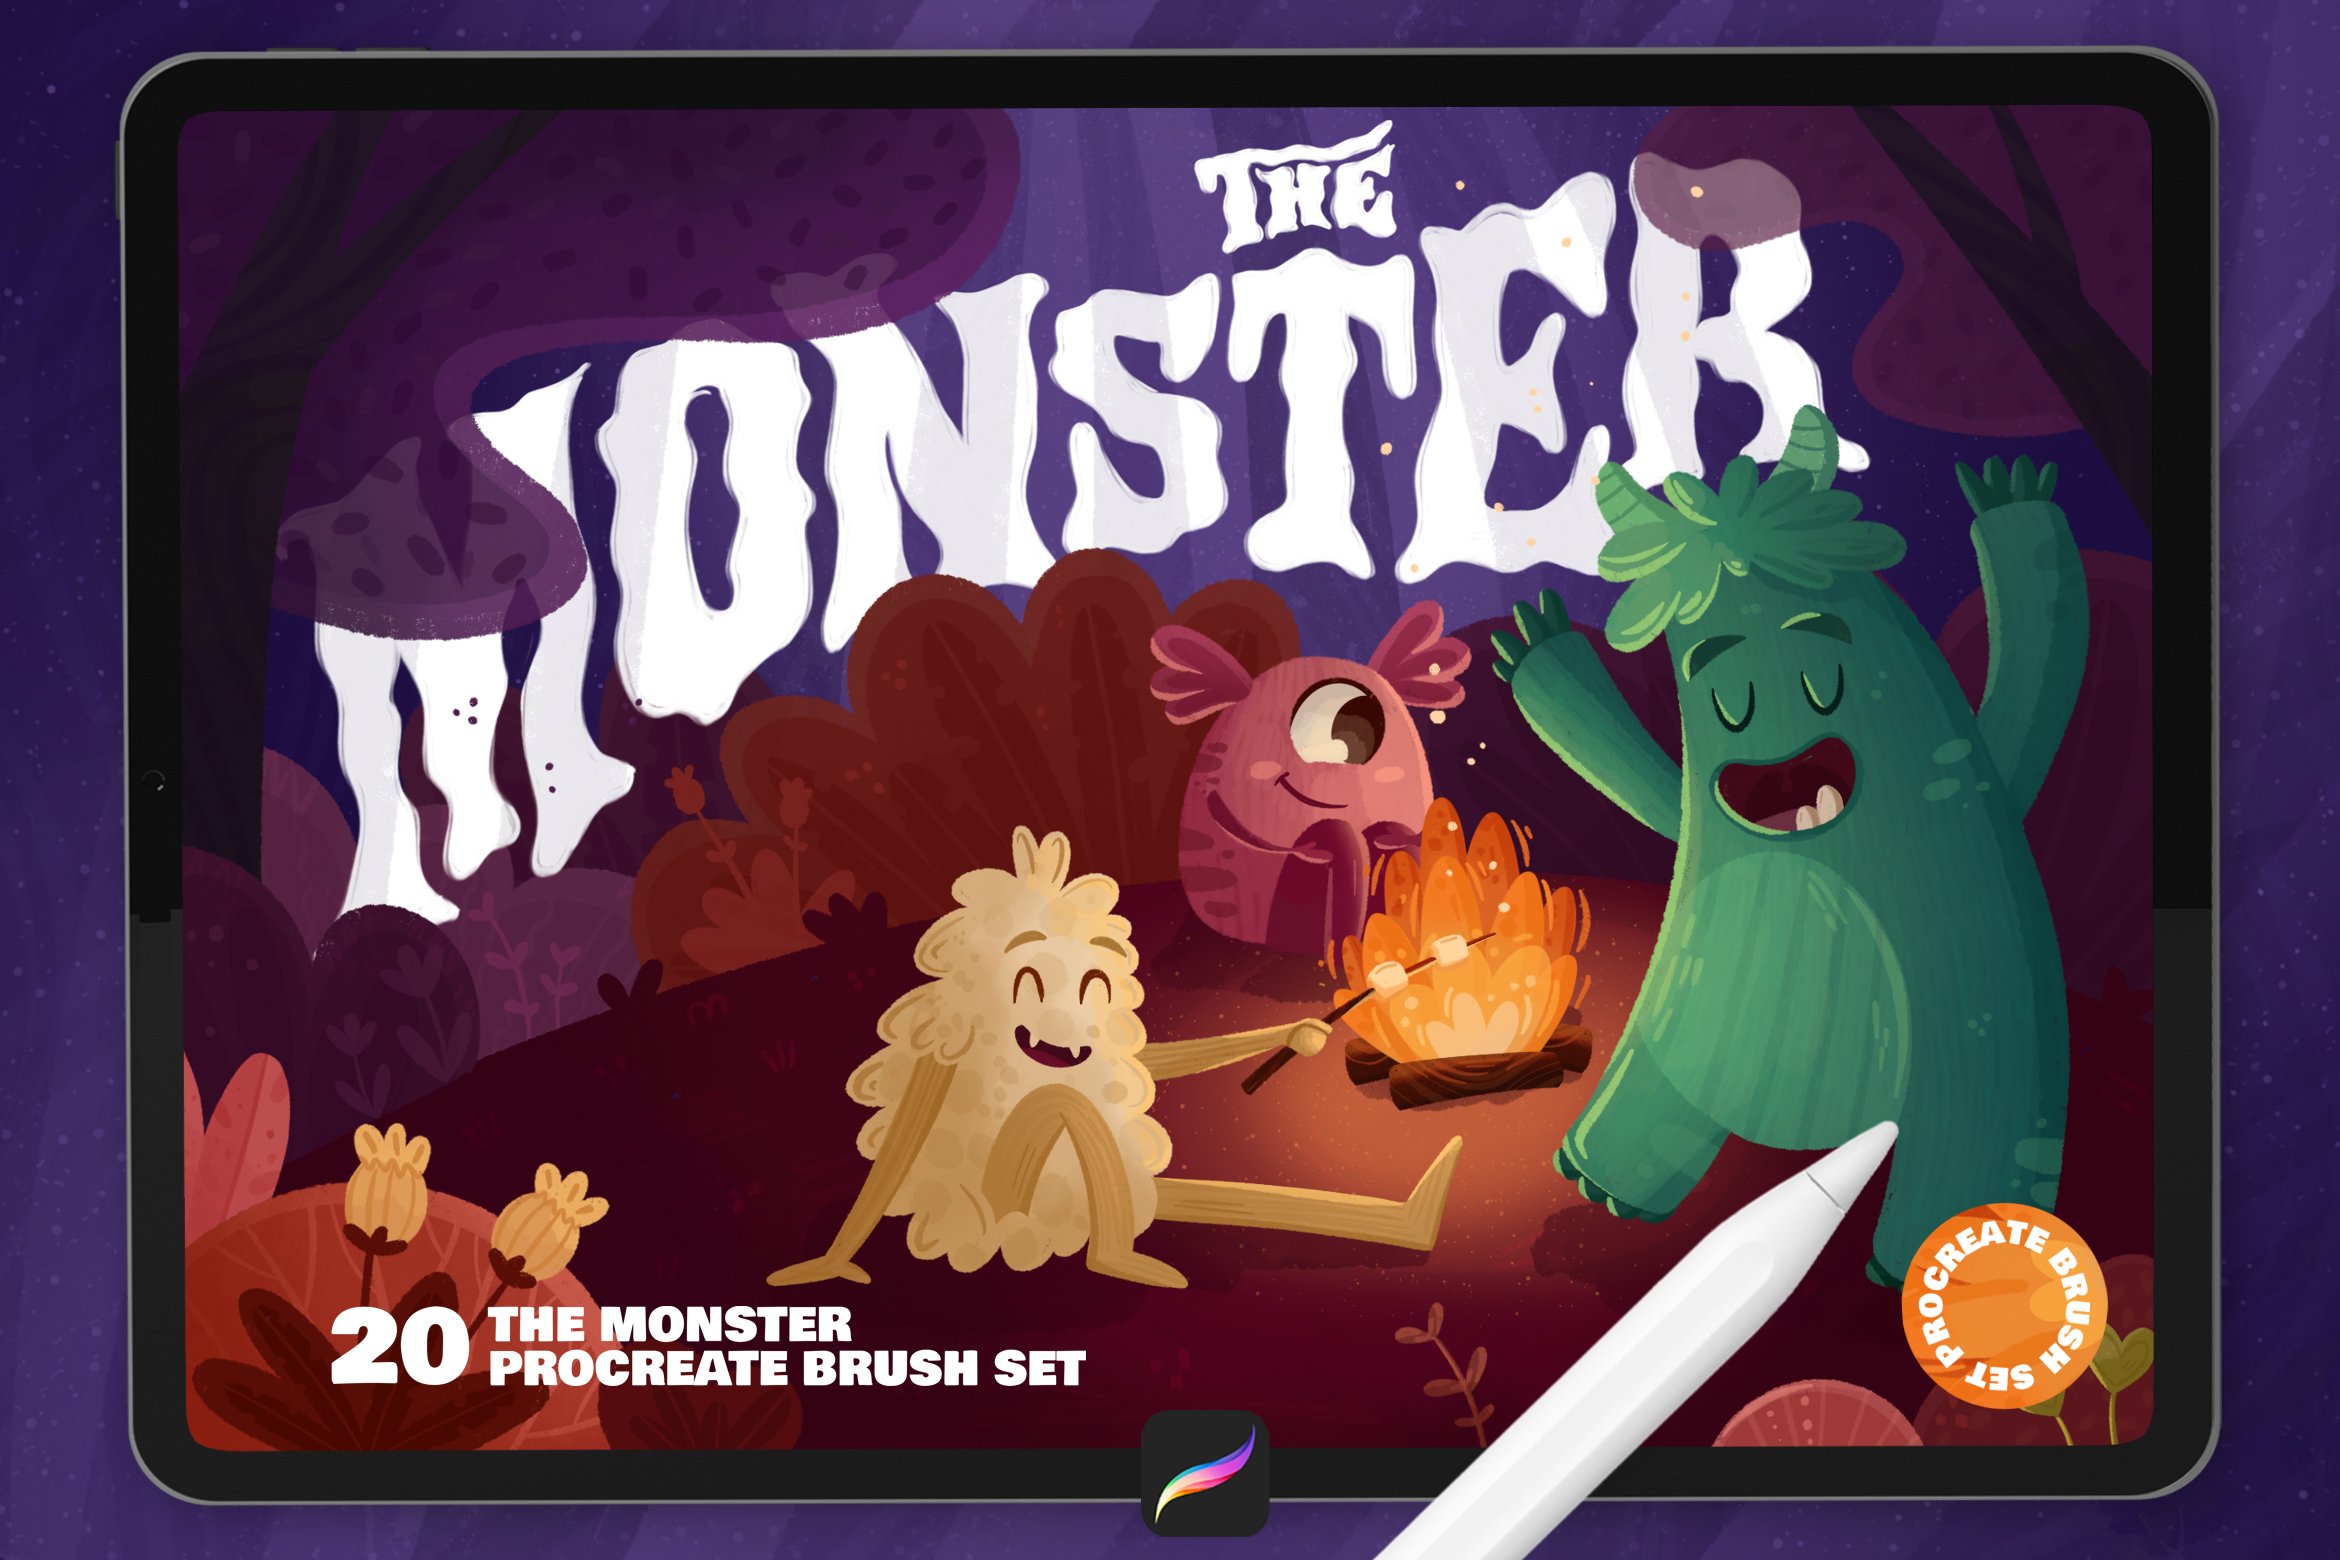 The Monster: Procreate Brushescover image.